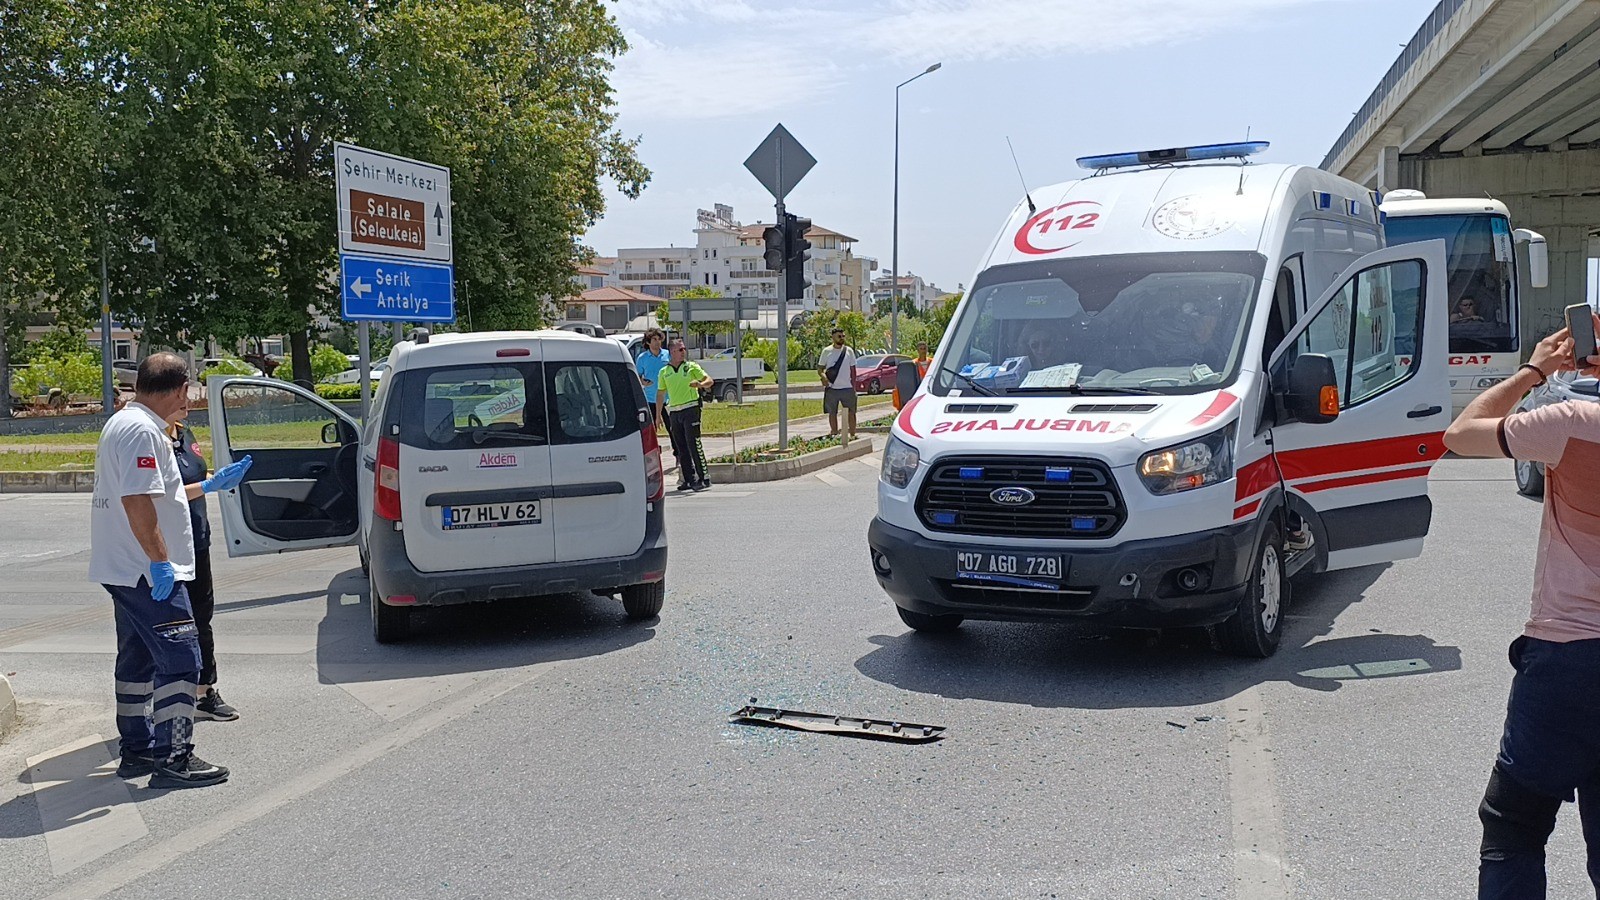 Antalyada Fikra Gibi Olay Kazaya Giden Ambulans Kaza Yapti (1)